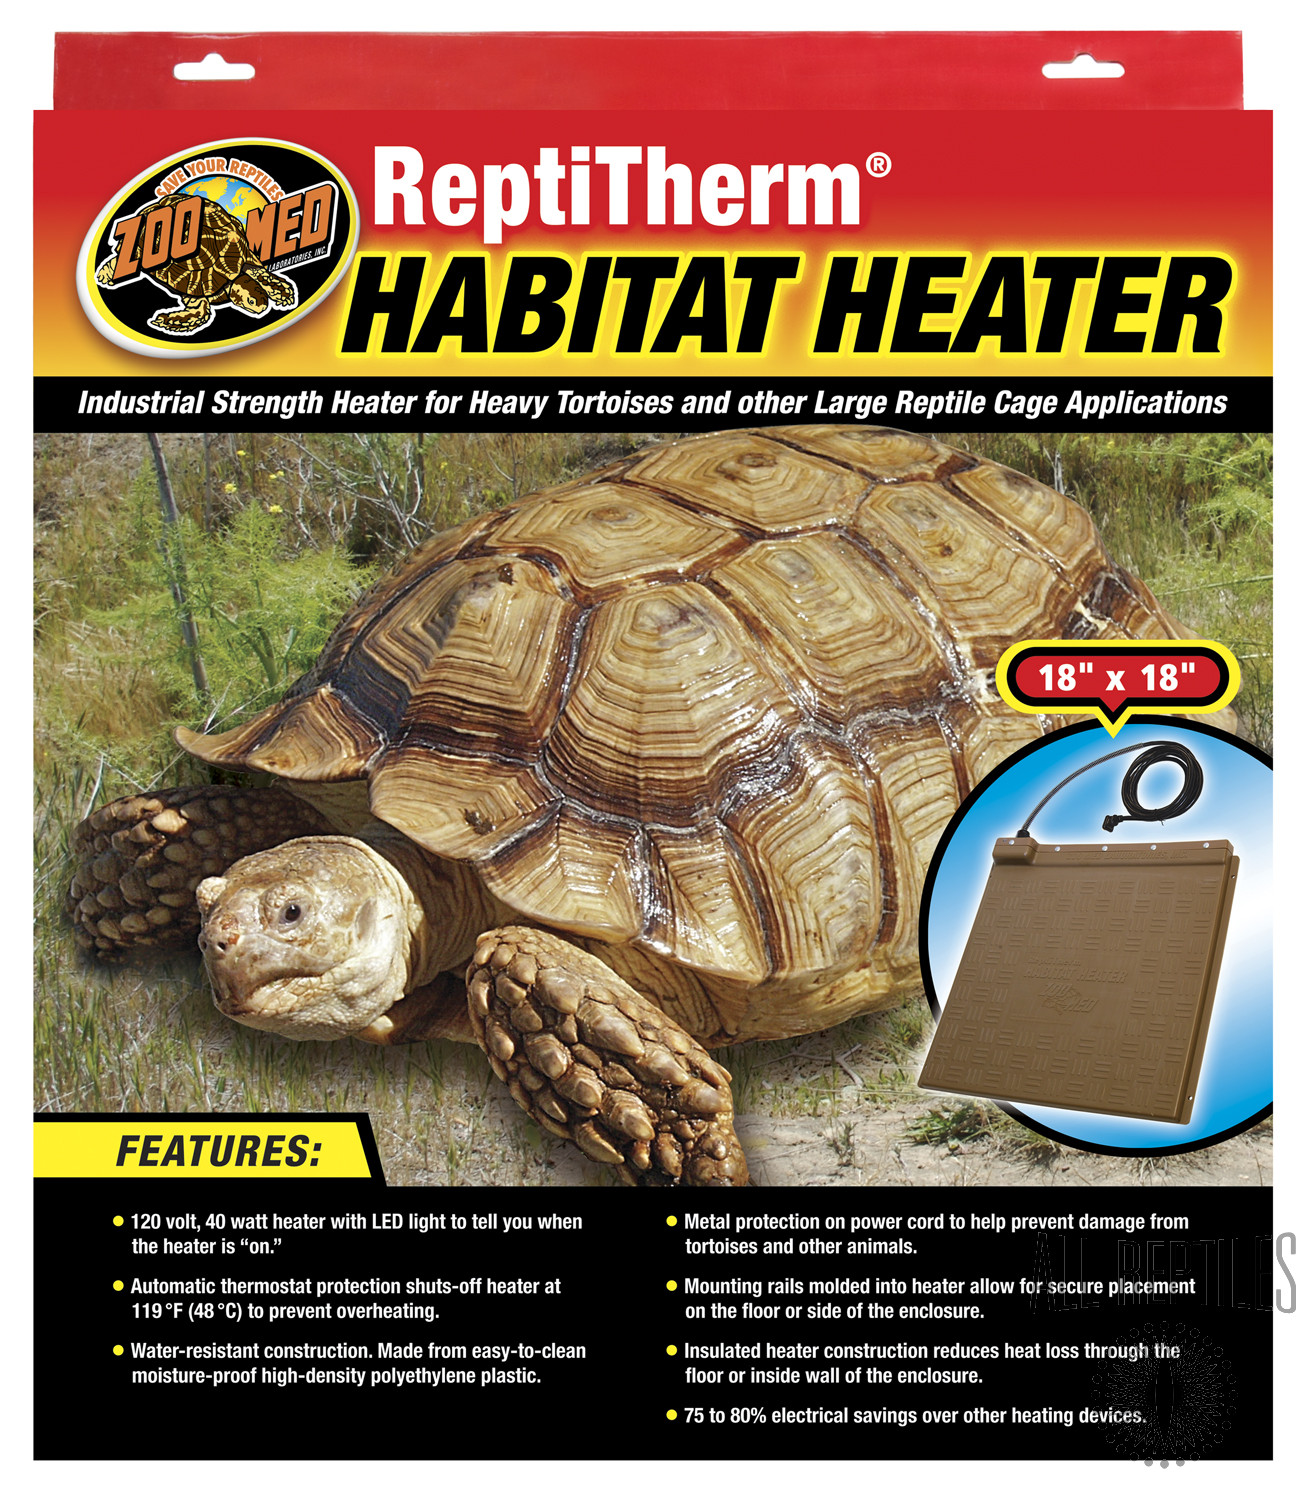 ZM Reptitherm Habitat Heater